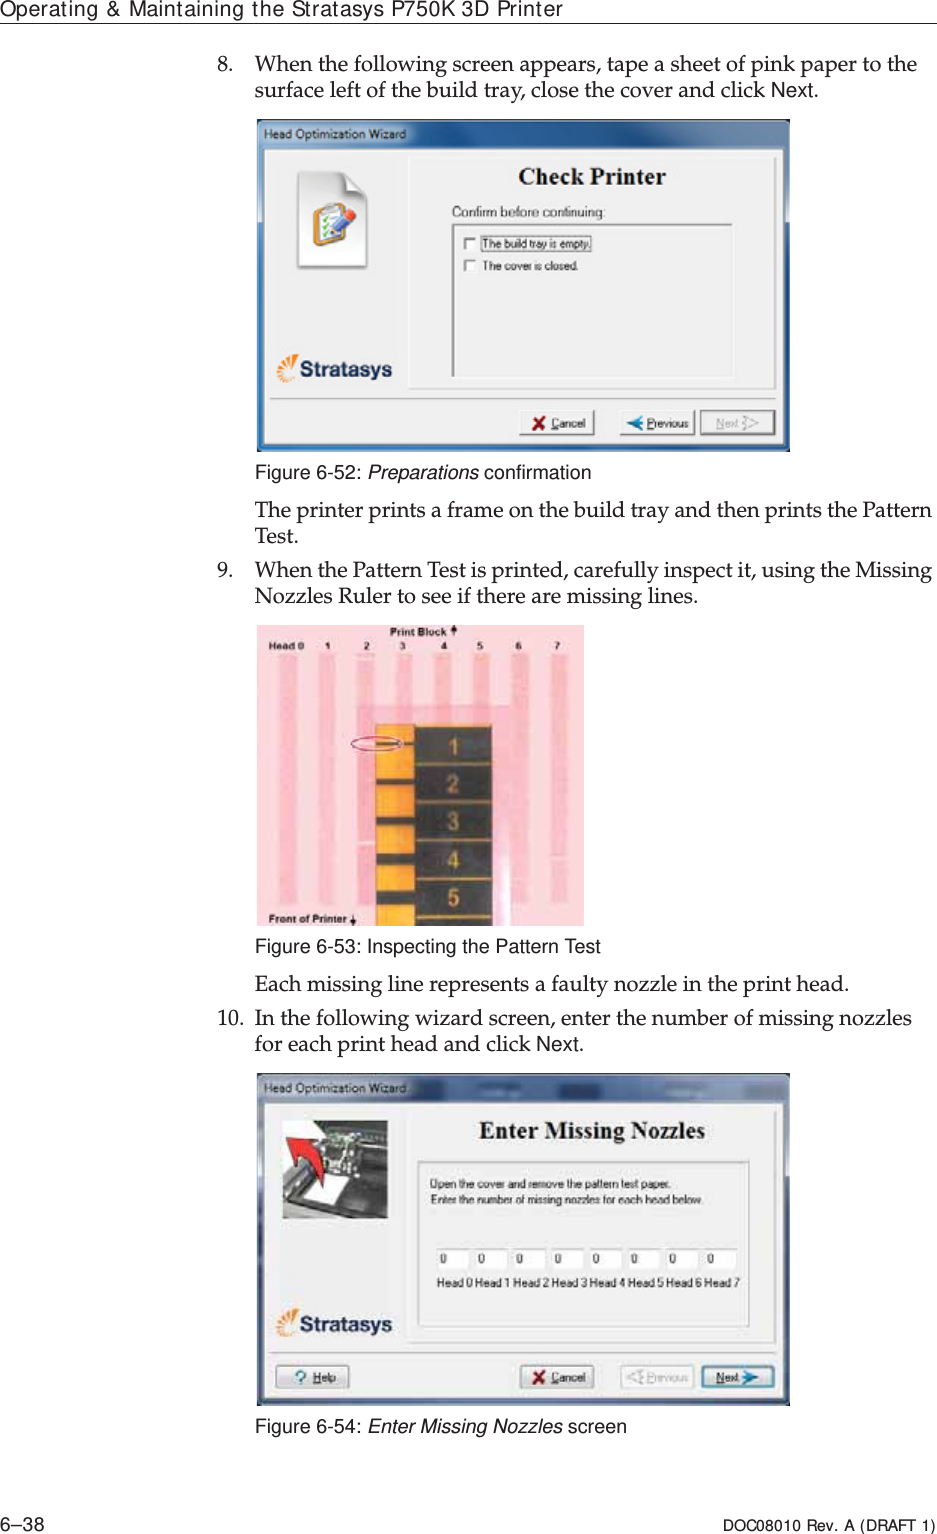 Operating &amp; Maintaining the Stratasys P750K 3D Printer6–38 DOC08010 Rev. A (DRAFT 1)8. Whenȱtheȱfollowingȱscreenȱappears,ȱtapeȱaȱsheetȱofȱpinkȱpaperȱtoȱtheȱsurfaceȱleftȱofȱtheȱbuildȱtray,ȱcloseȱtheȱcoverȱandȱclickȱNext.Figure 6-52: Preparations confirmationTheȱprinterȱprintsȱaȱframeȱonȱtheȱbuildȱtrayȱandȱthenȱprintsȱtheȱPatternȱTest.9. WhenȱtheȱPatternȱTestȱisȱprinted,ȱcarefullyȱinspectȱit,ȱusingȱtheȱMissingȱNozzlesȱRulerȱtoȱseeȱifȱthereȱareȱmissingȱlines.Figure 6-53: Inspecting the Pattern TestEachȱmissingȱlineȱrepresentsȱaȱfaultyȱnozzleȱinȱtheȱprintȱhead.10. Inȱtheȱfollowingȱwizardȱscreen,ȱenterȱtheȱnumberȱofȱmissingȱnozzlesȱforȱeachȱprintȱheadȱandȱclickȱNext.Figure 6-54: Enter Missing Nozzles screen